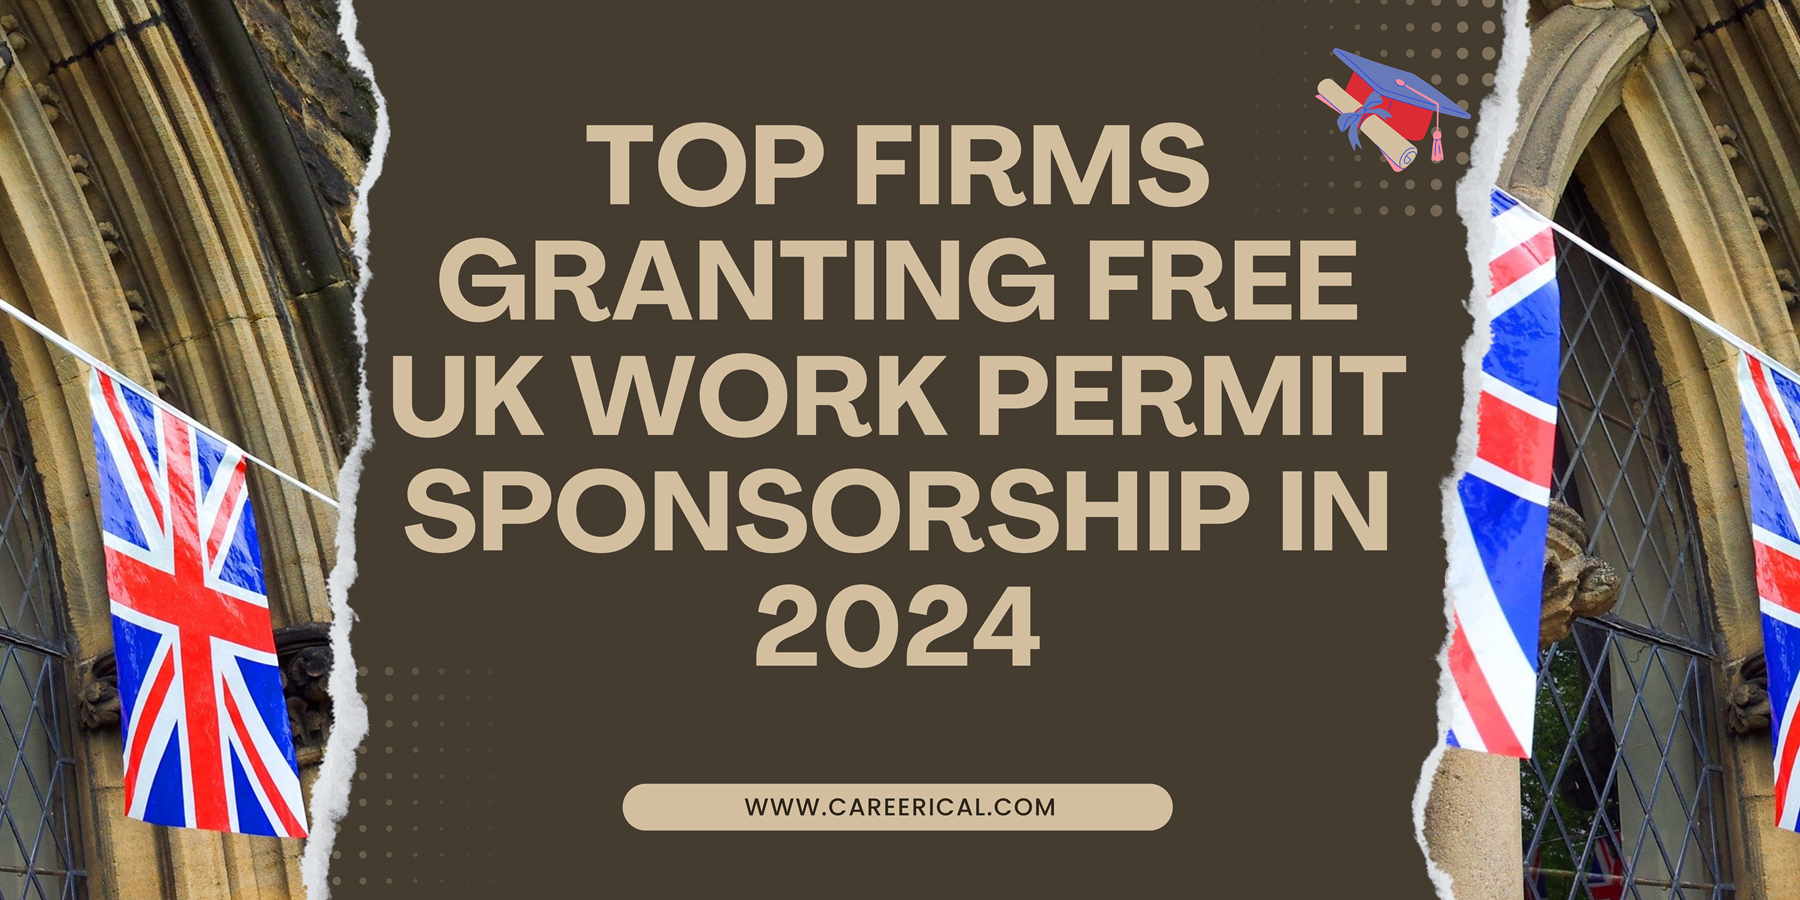 Top Firms Granting Free UK Work Permit Sponsorship in 2024